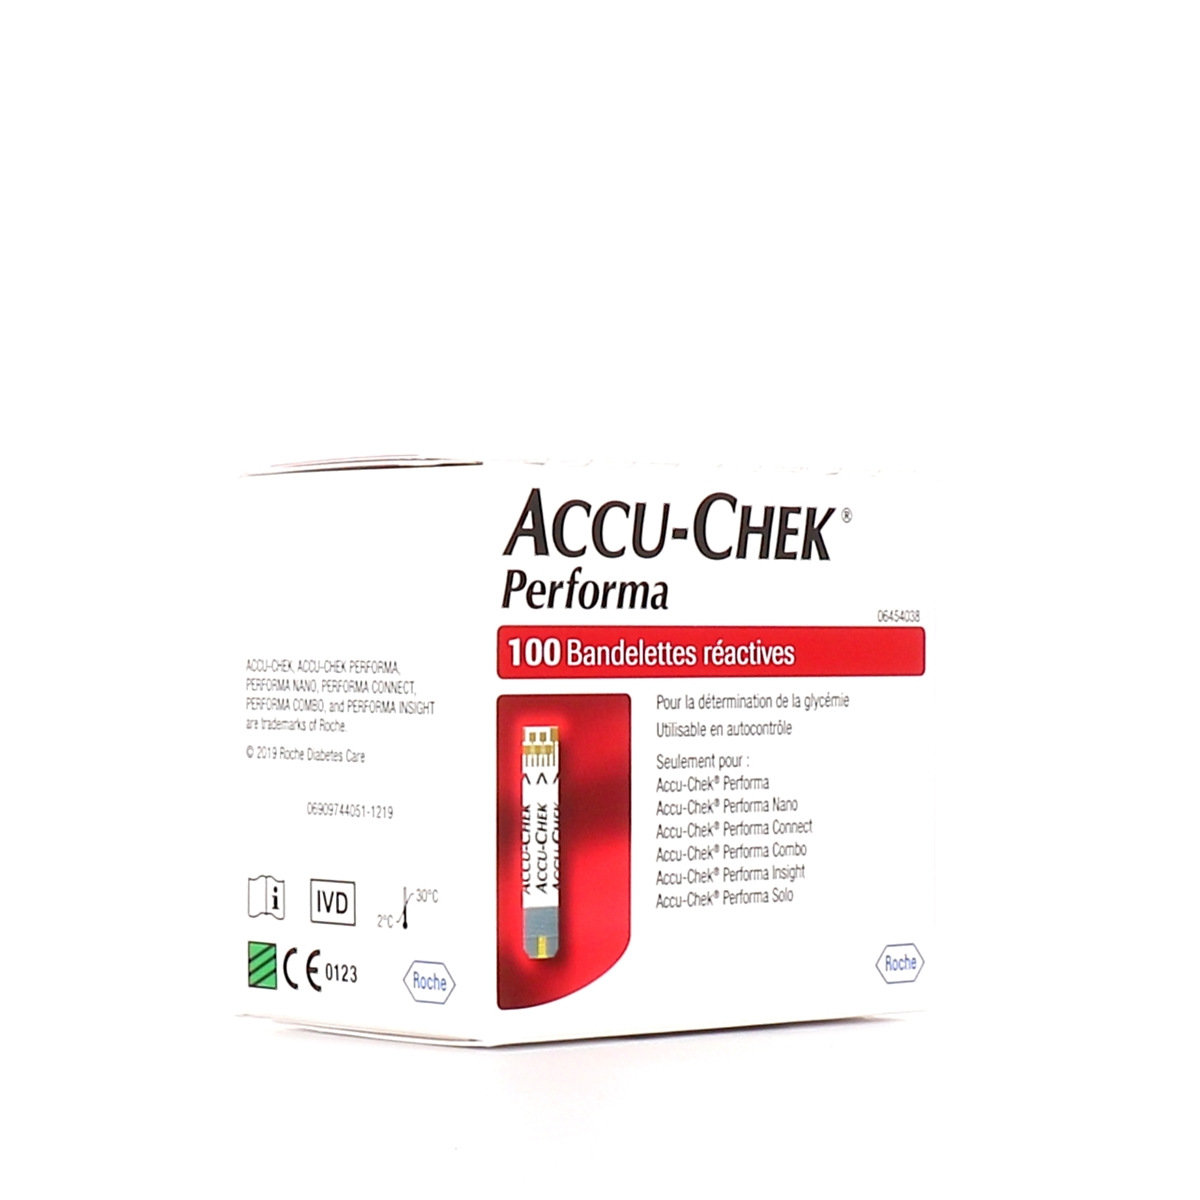 Bandelettes réactives Accu-Chek Performa - Pharmacie des Drakkars